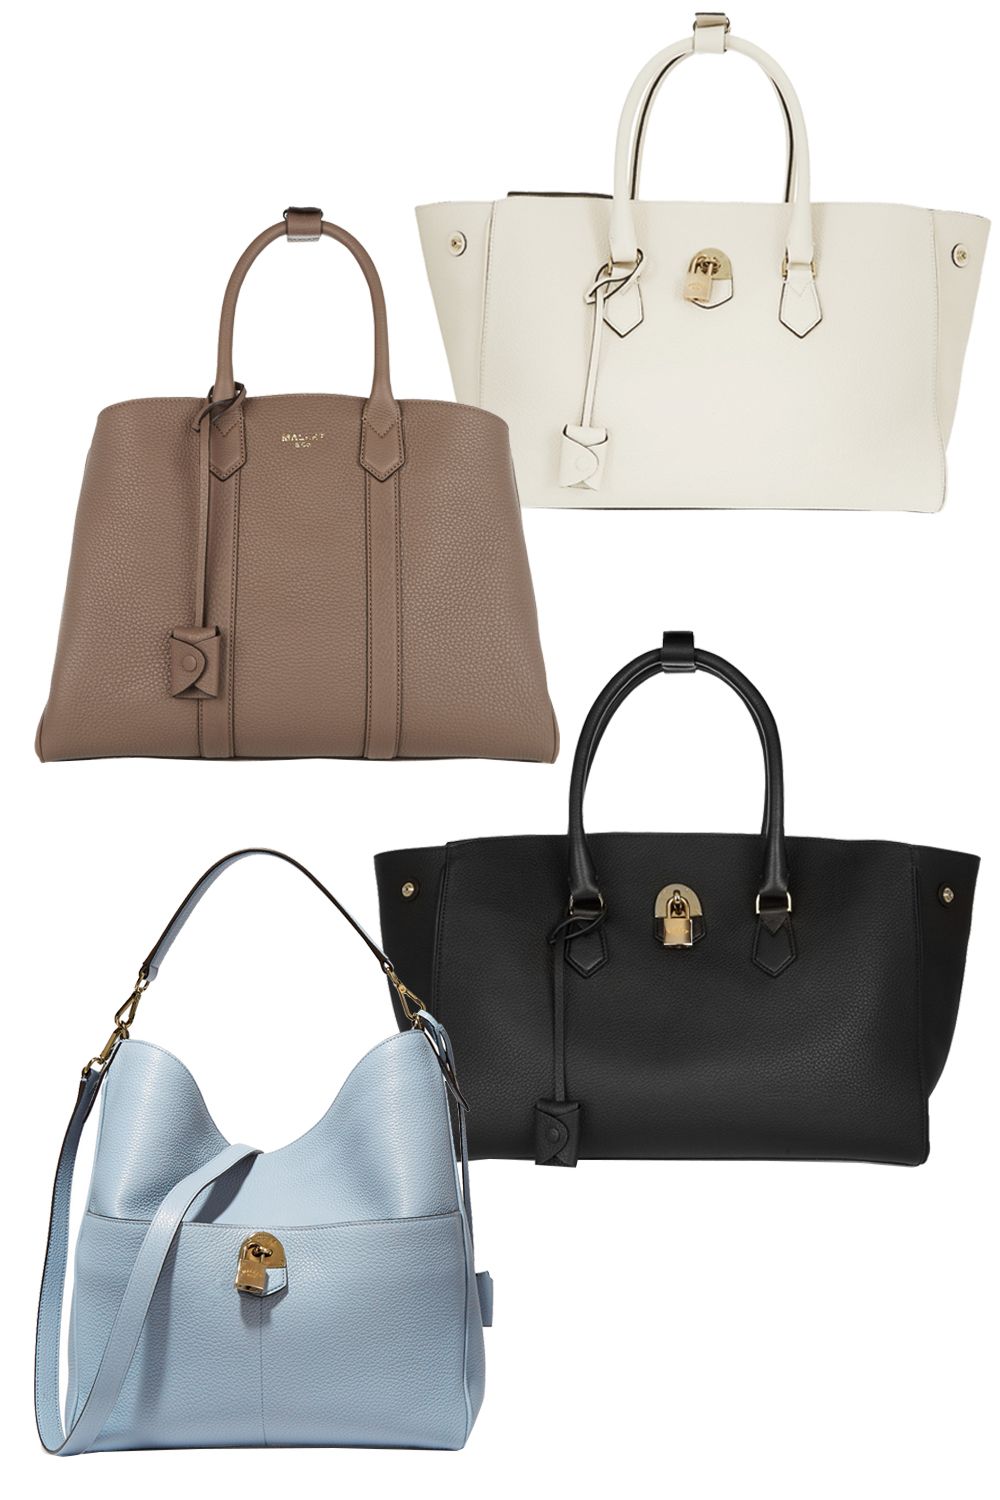 latest fashion handbags 2016